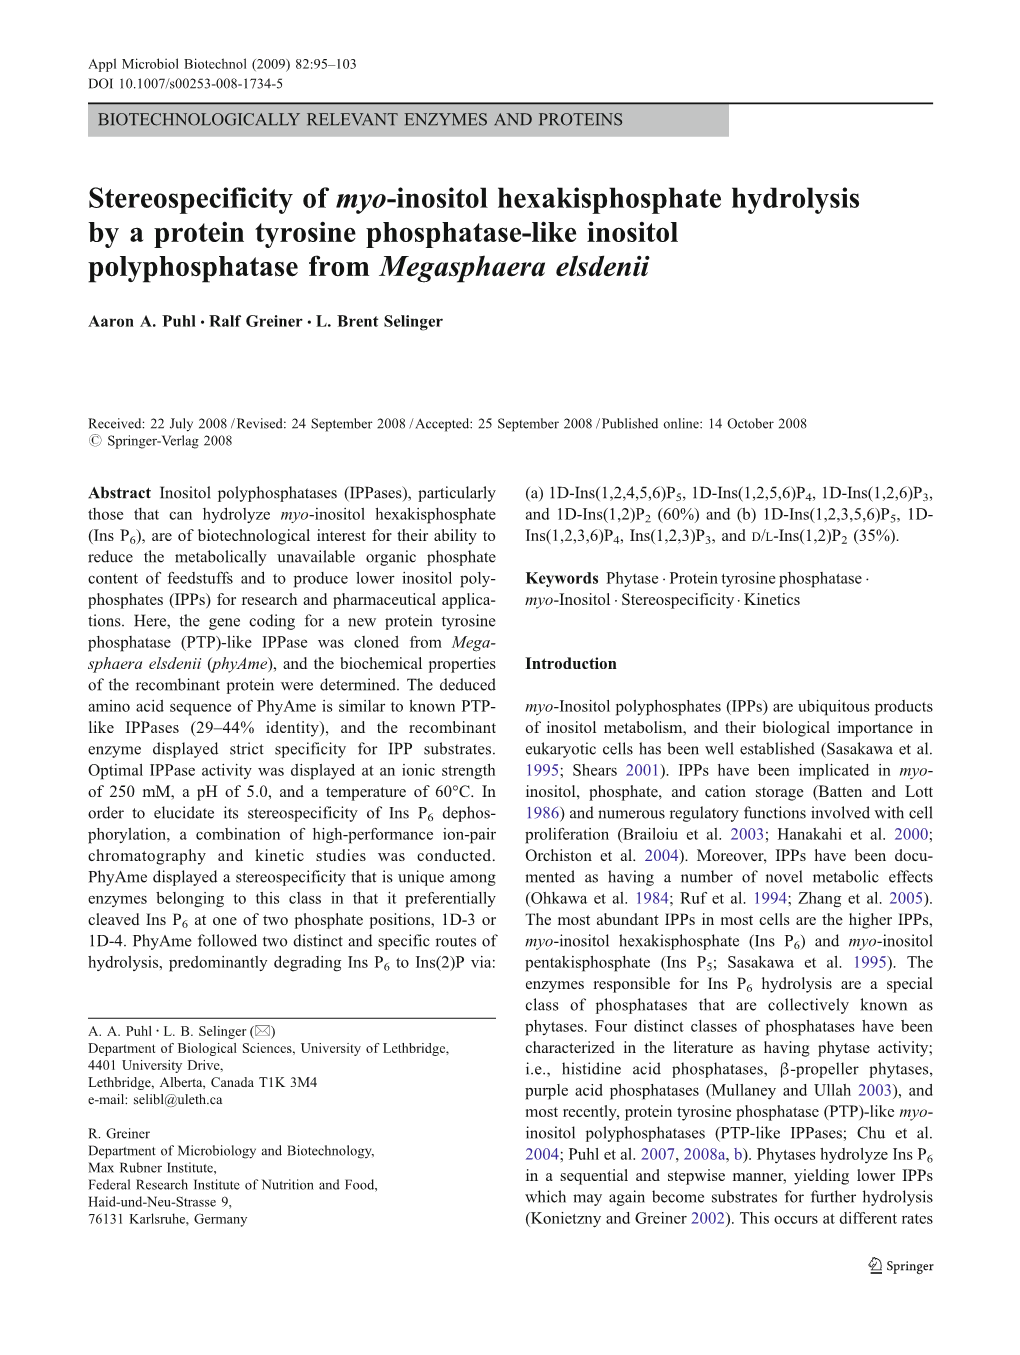 Stereospecificity of Myo-Inositol Hexakisphosphate Hydrolysis by a Protein Tyrosine Phosphatase-Like Inositol Polyphosphatase from Megasphaera Elsdenii